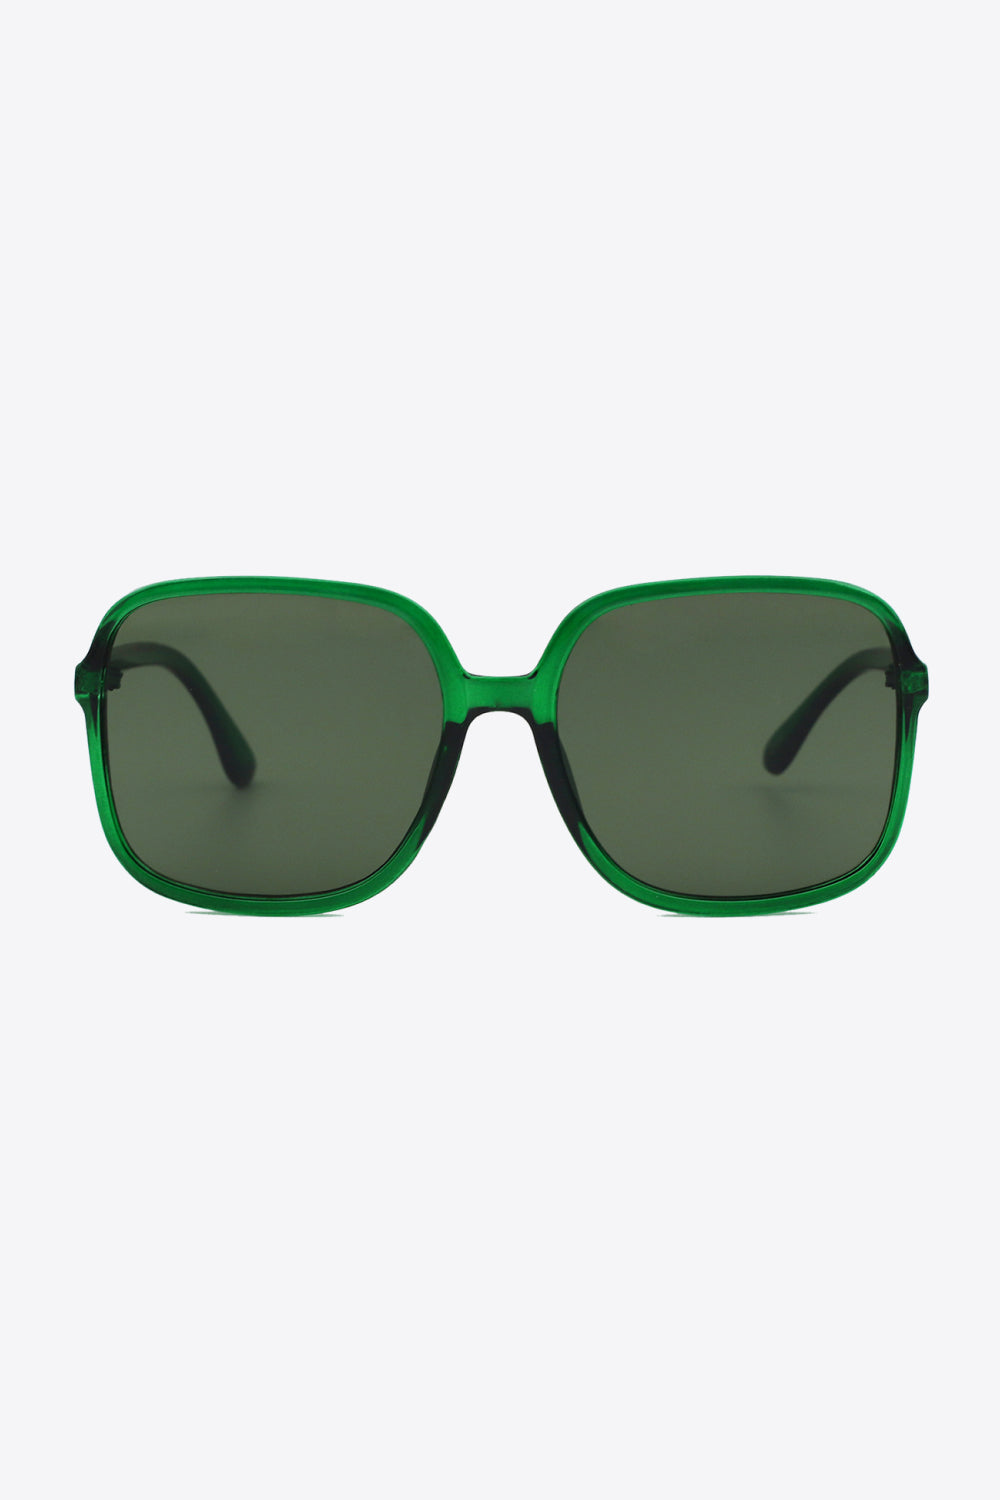 Polycarbonate Square Sunglasses - BEAUTY COSMOTICS SHOP